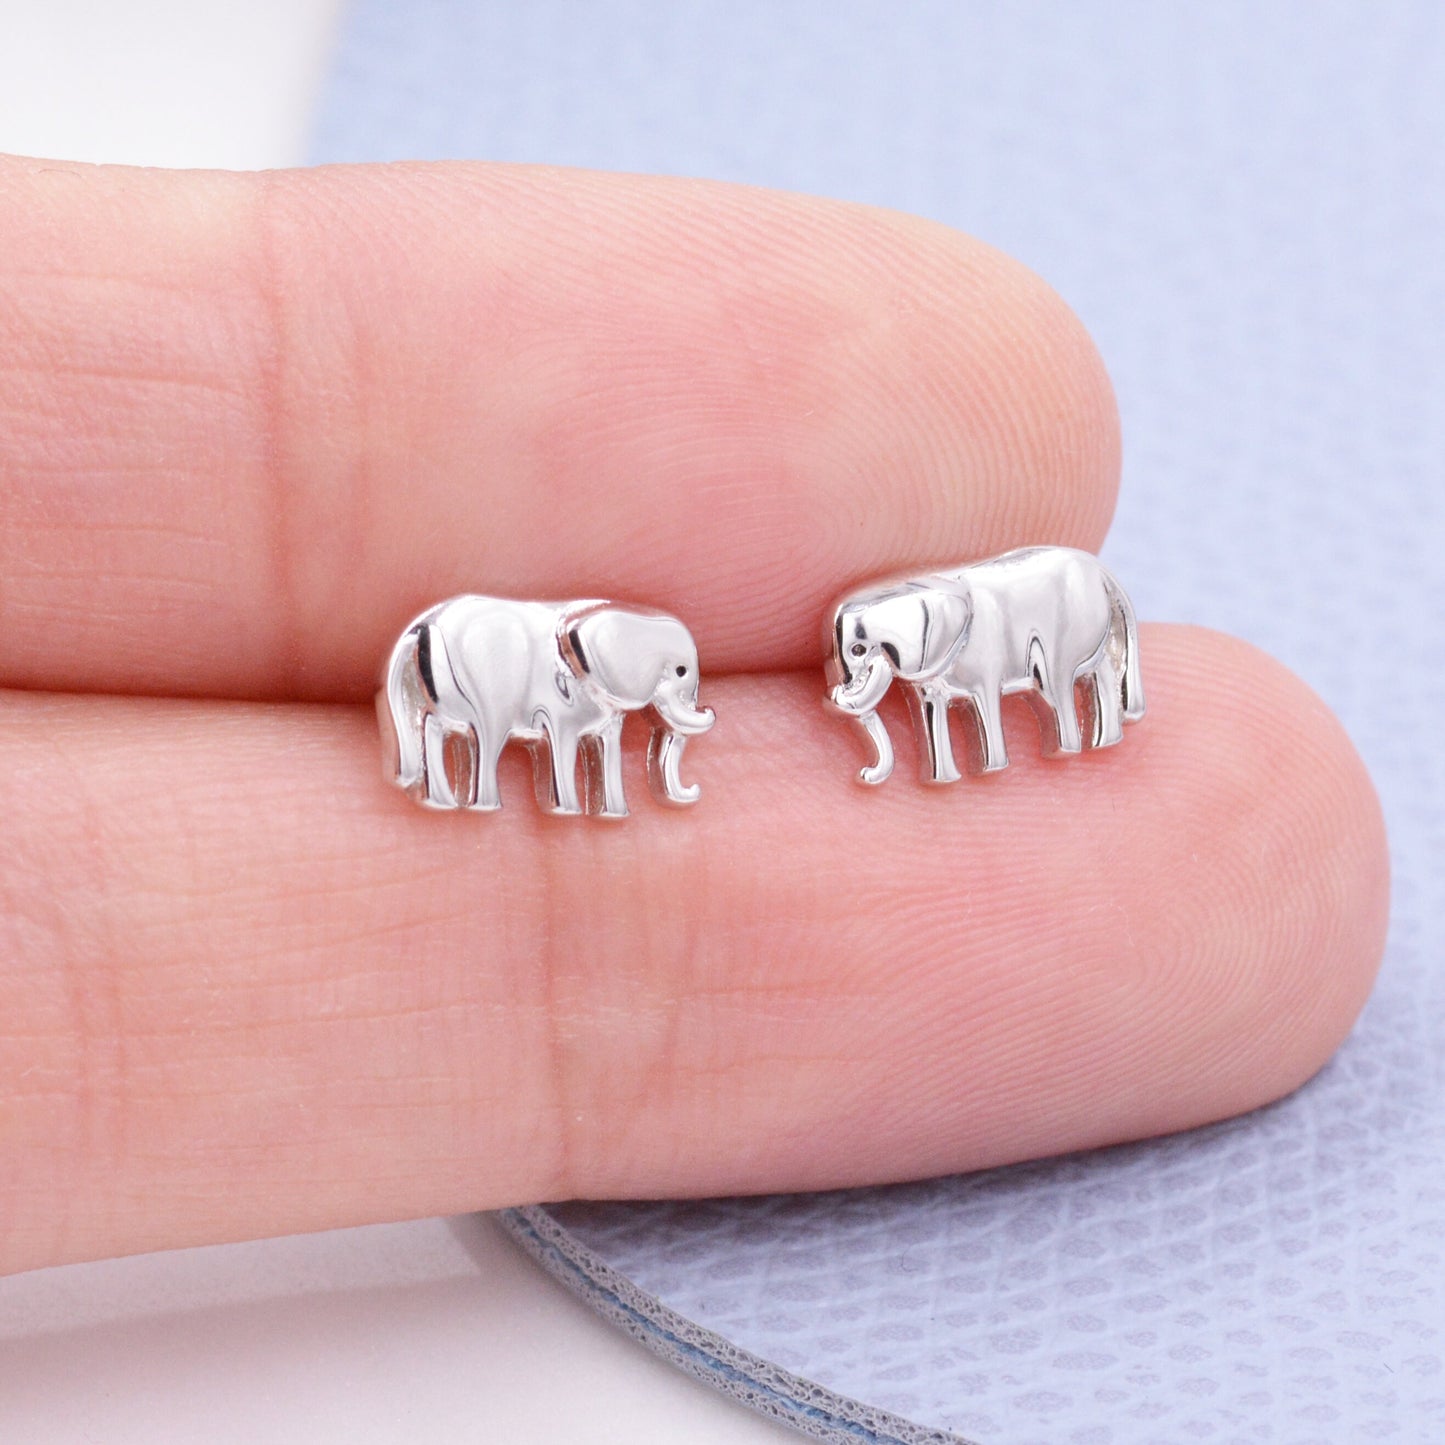 Cute Elephant Stud Earrings in Sterling Silver, Cute Dainty Animal Stud